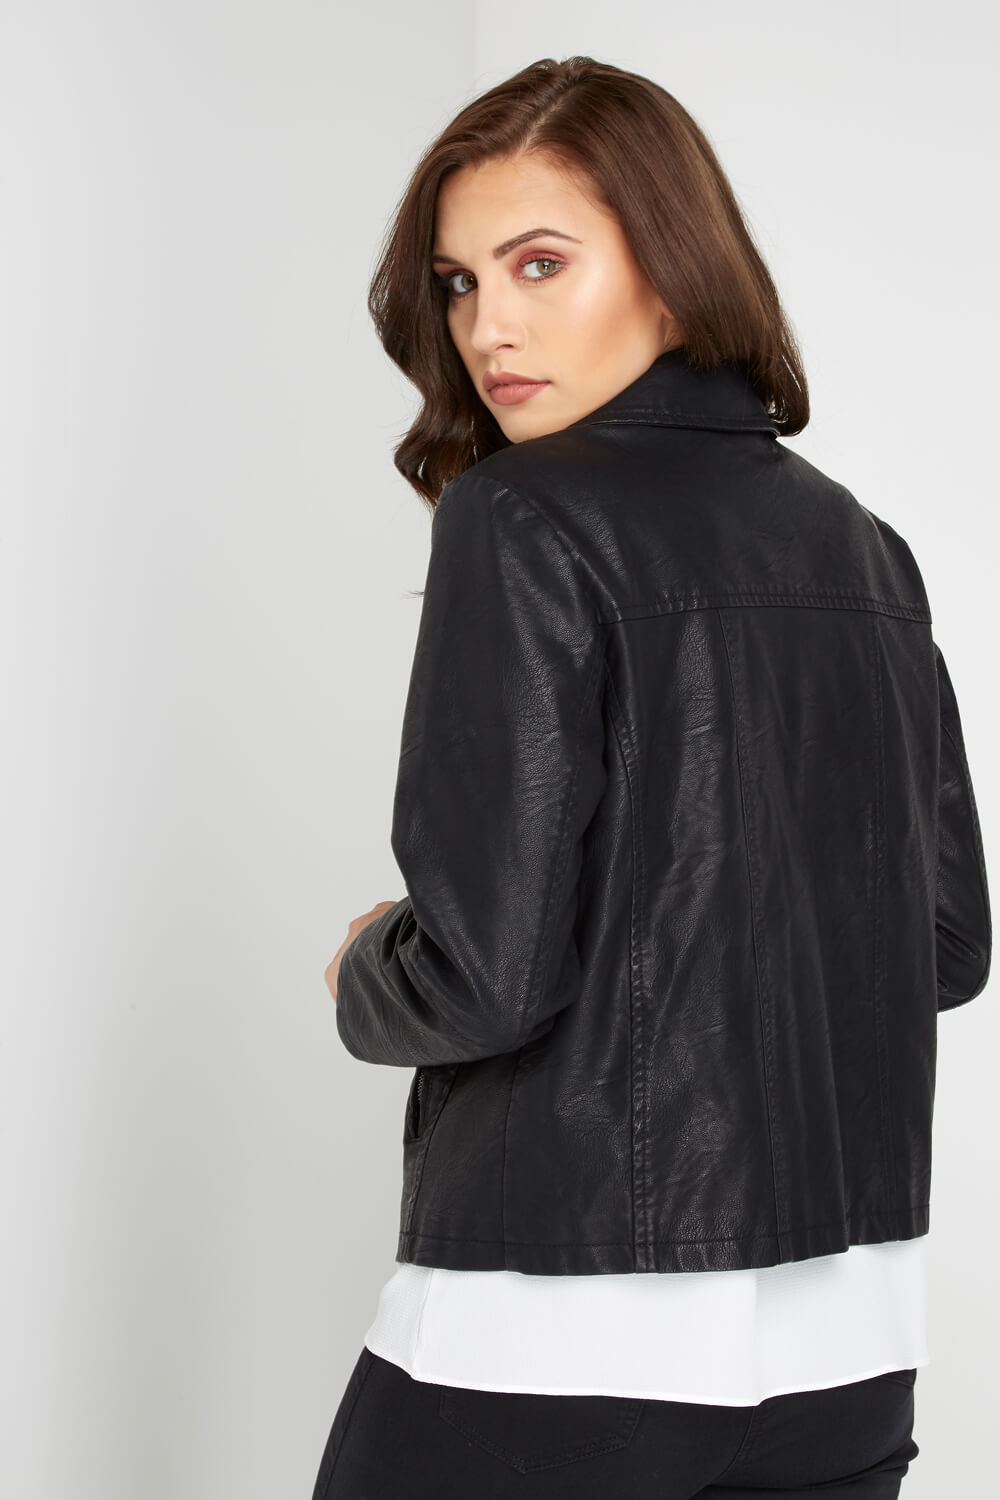 romans leather jackets